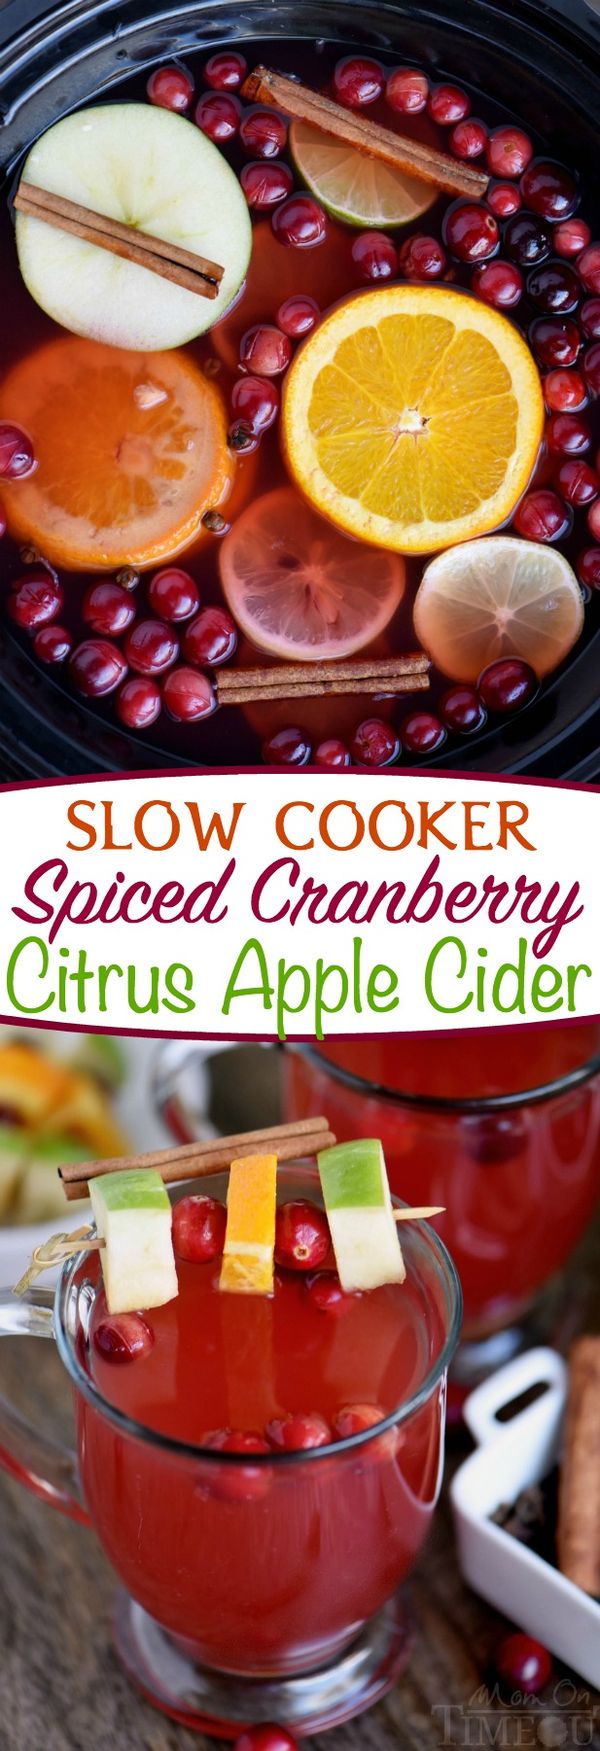 Slow Cooker Spiced Cranberry Apple Citrus Cider